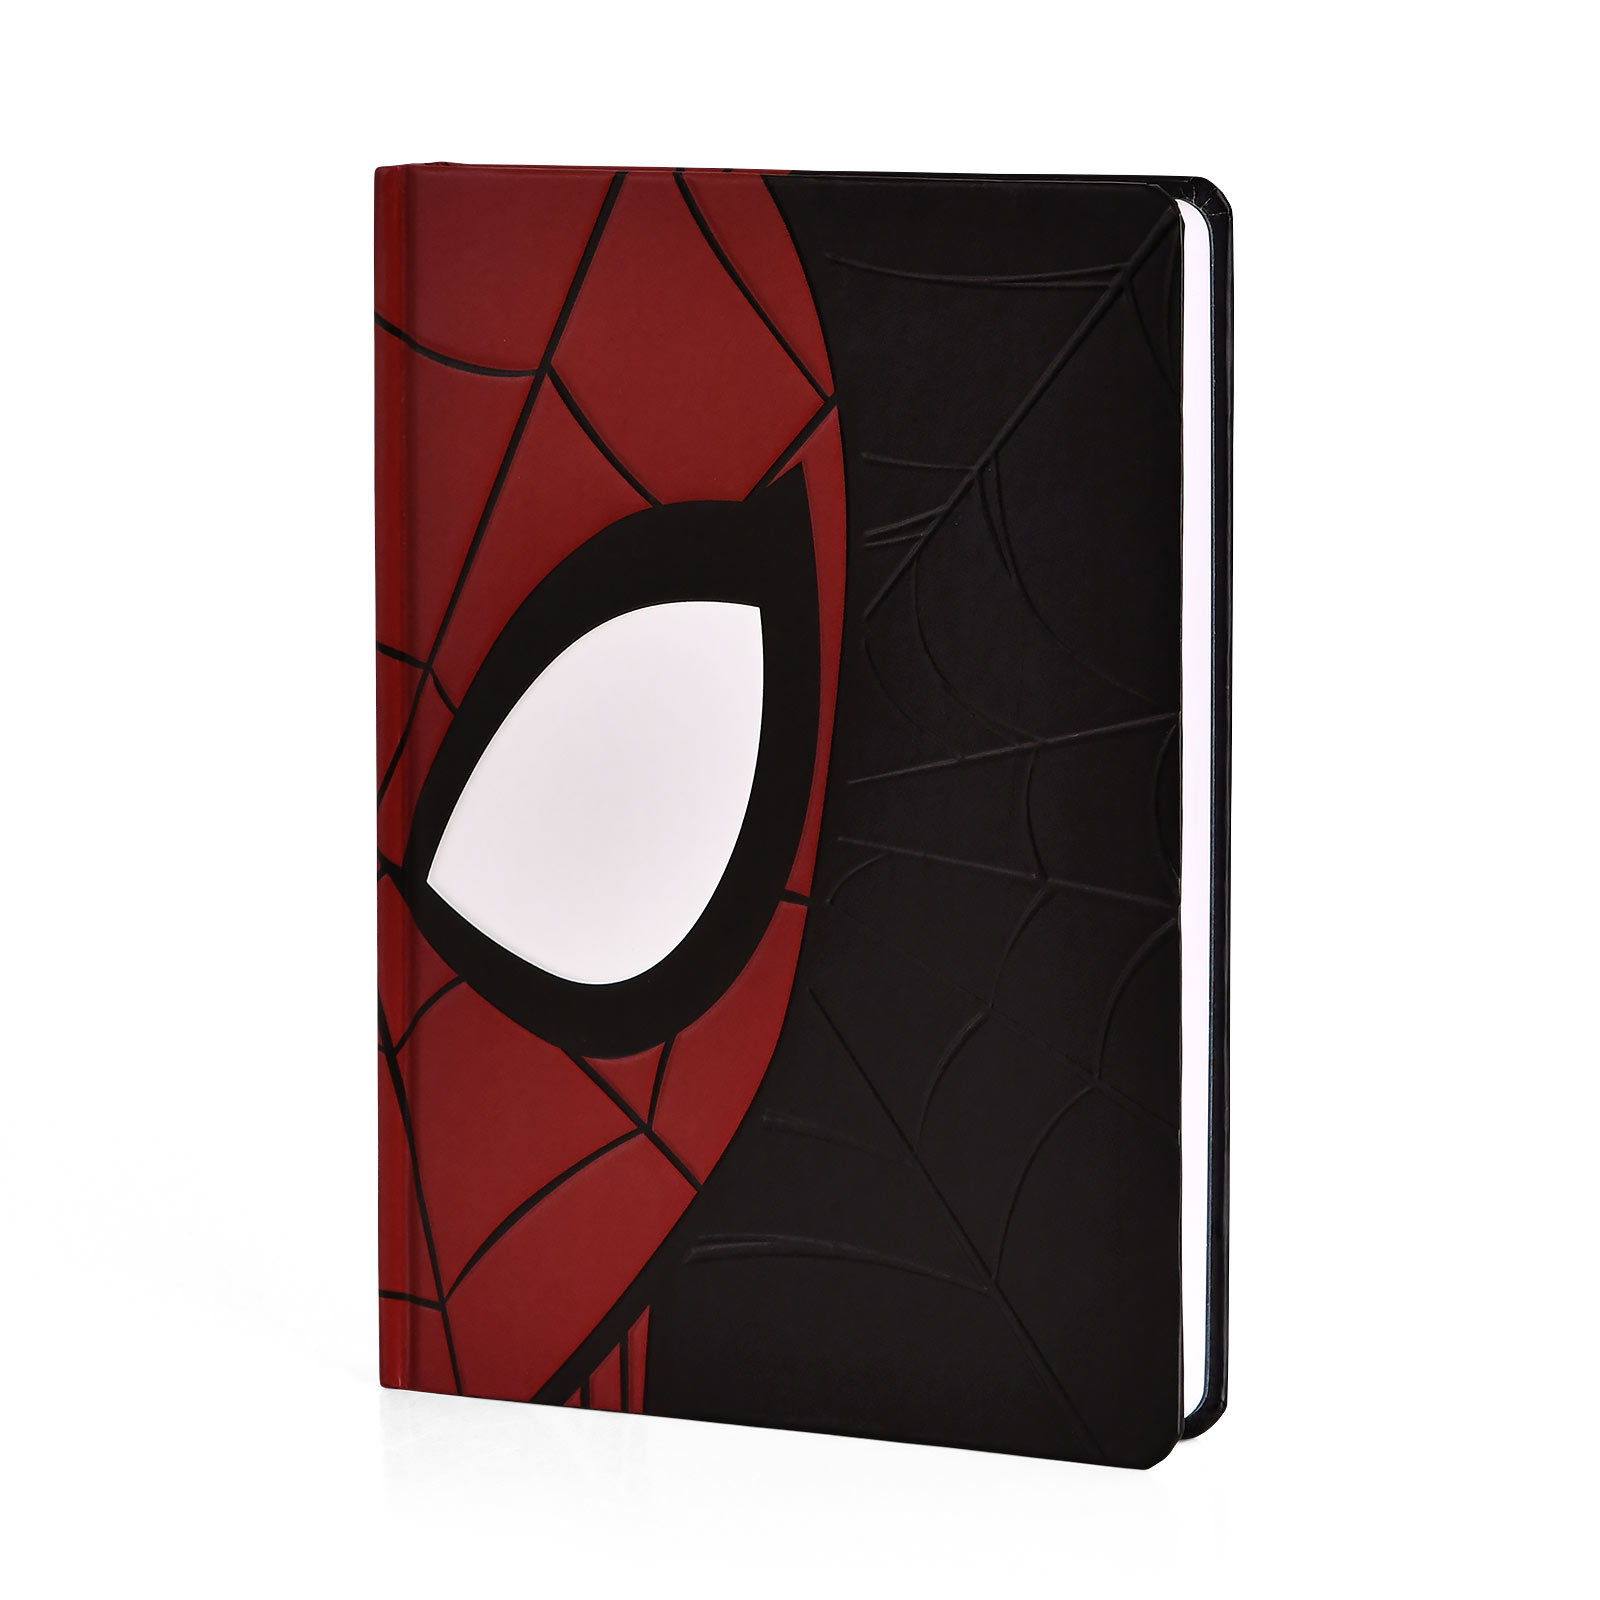 Spider-Man - Carnet de notes A5